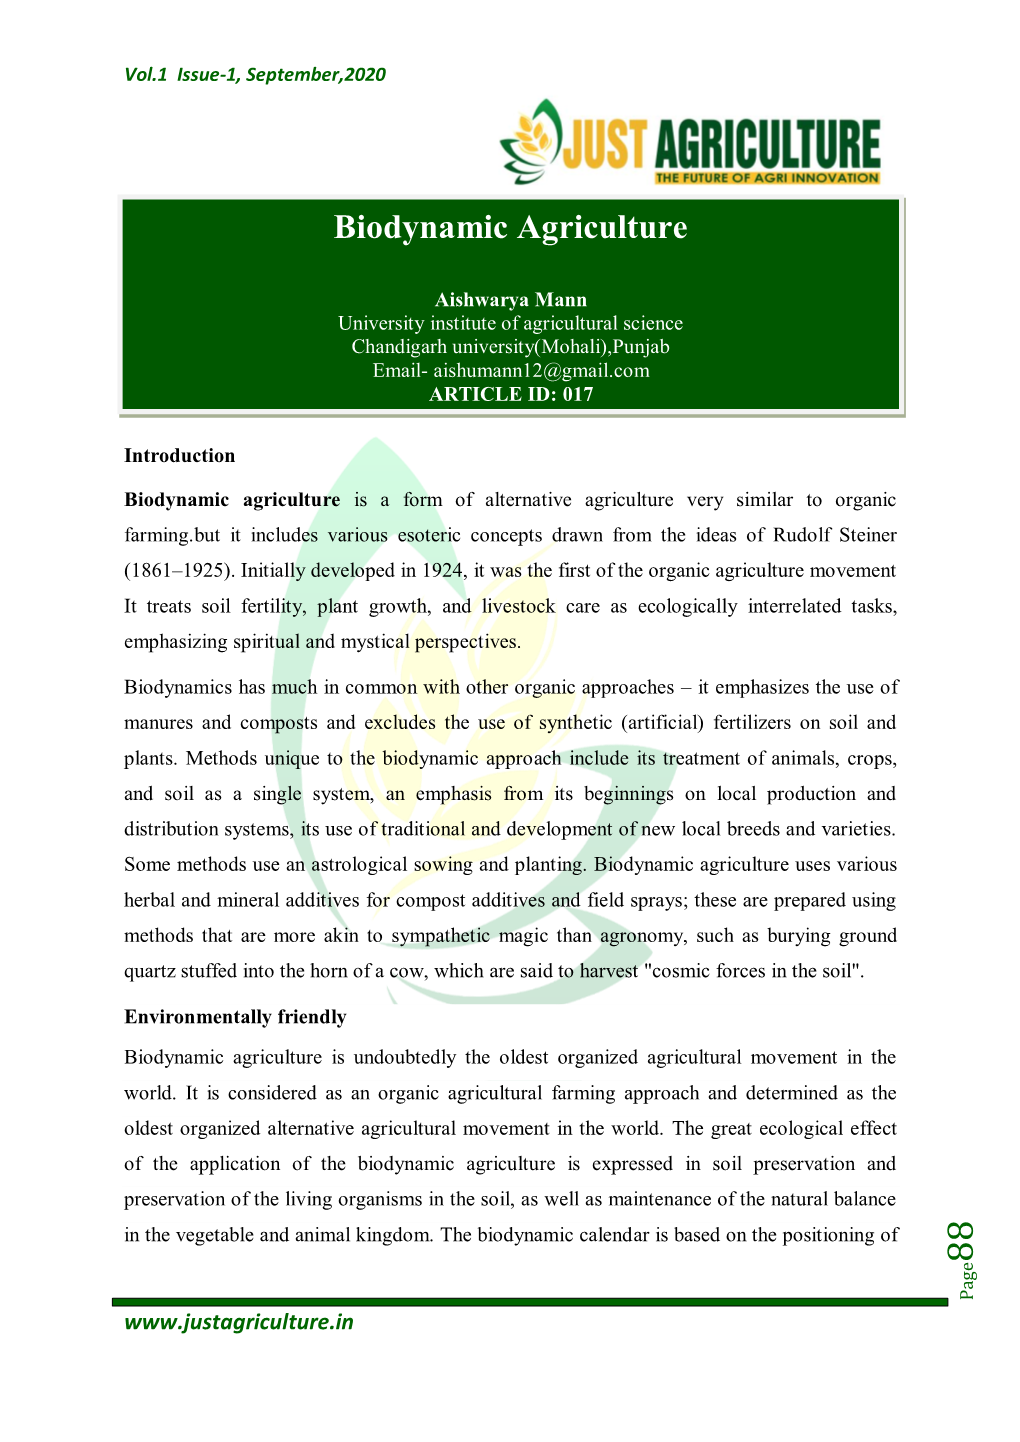 Biodynamic Agriculture